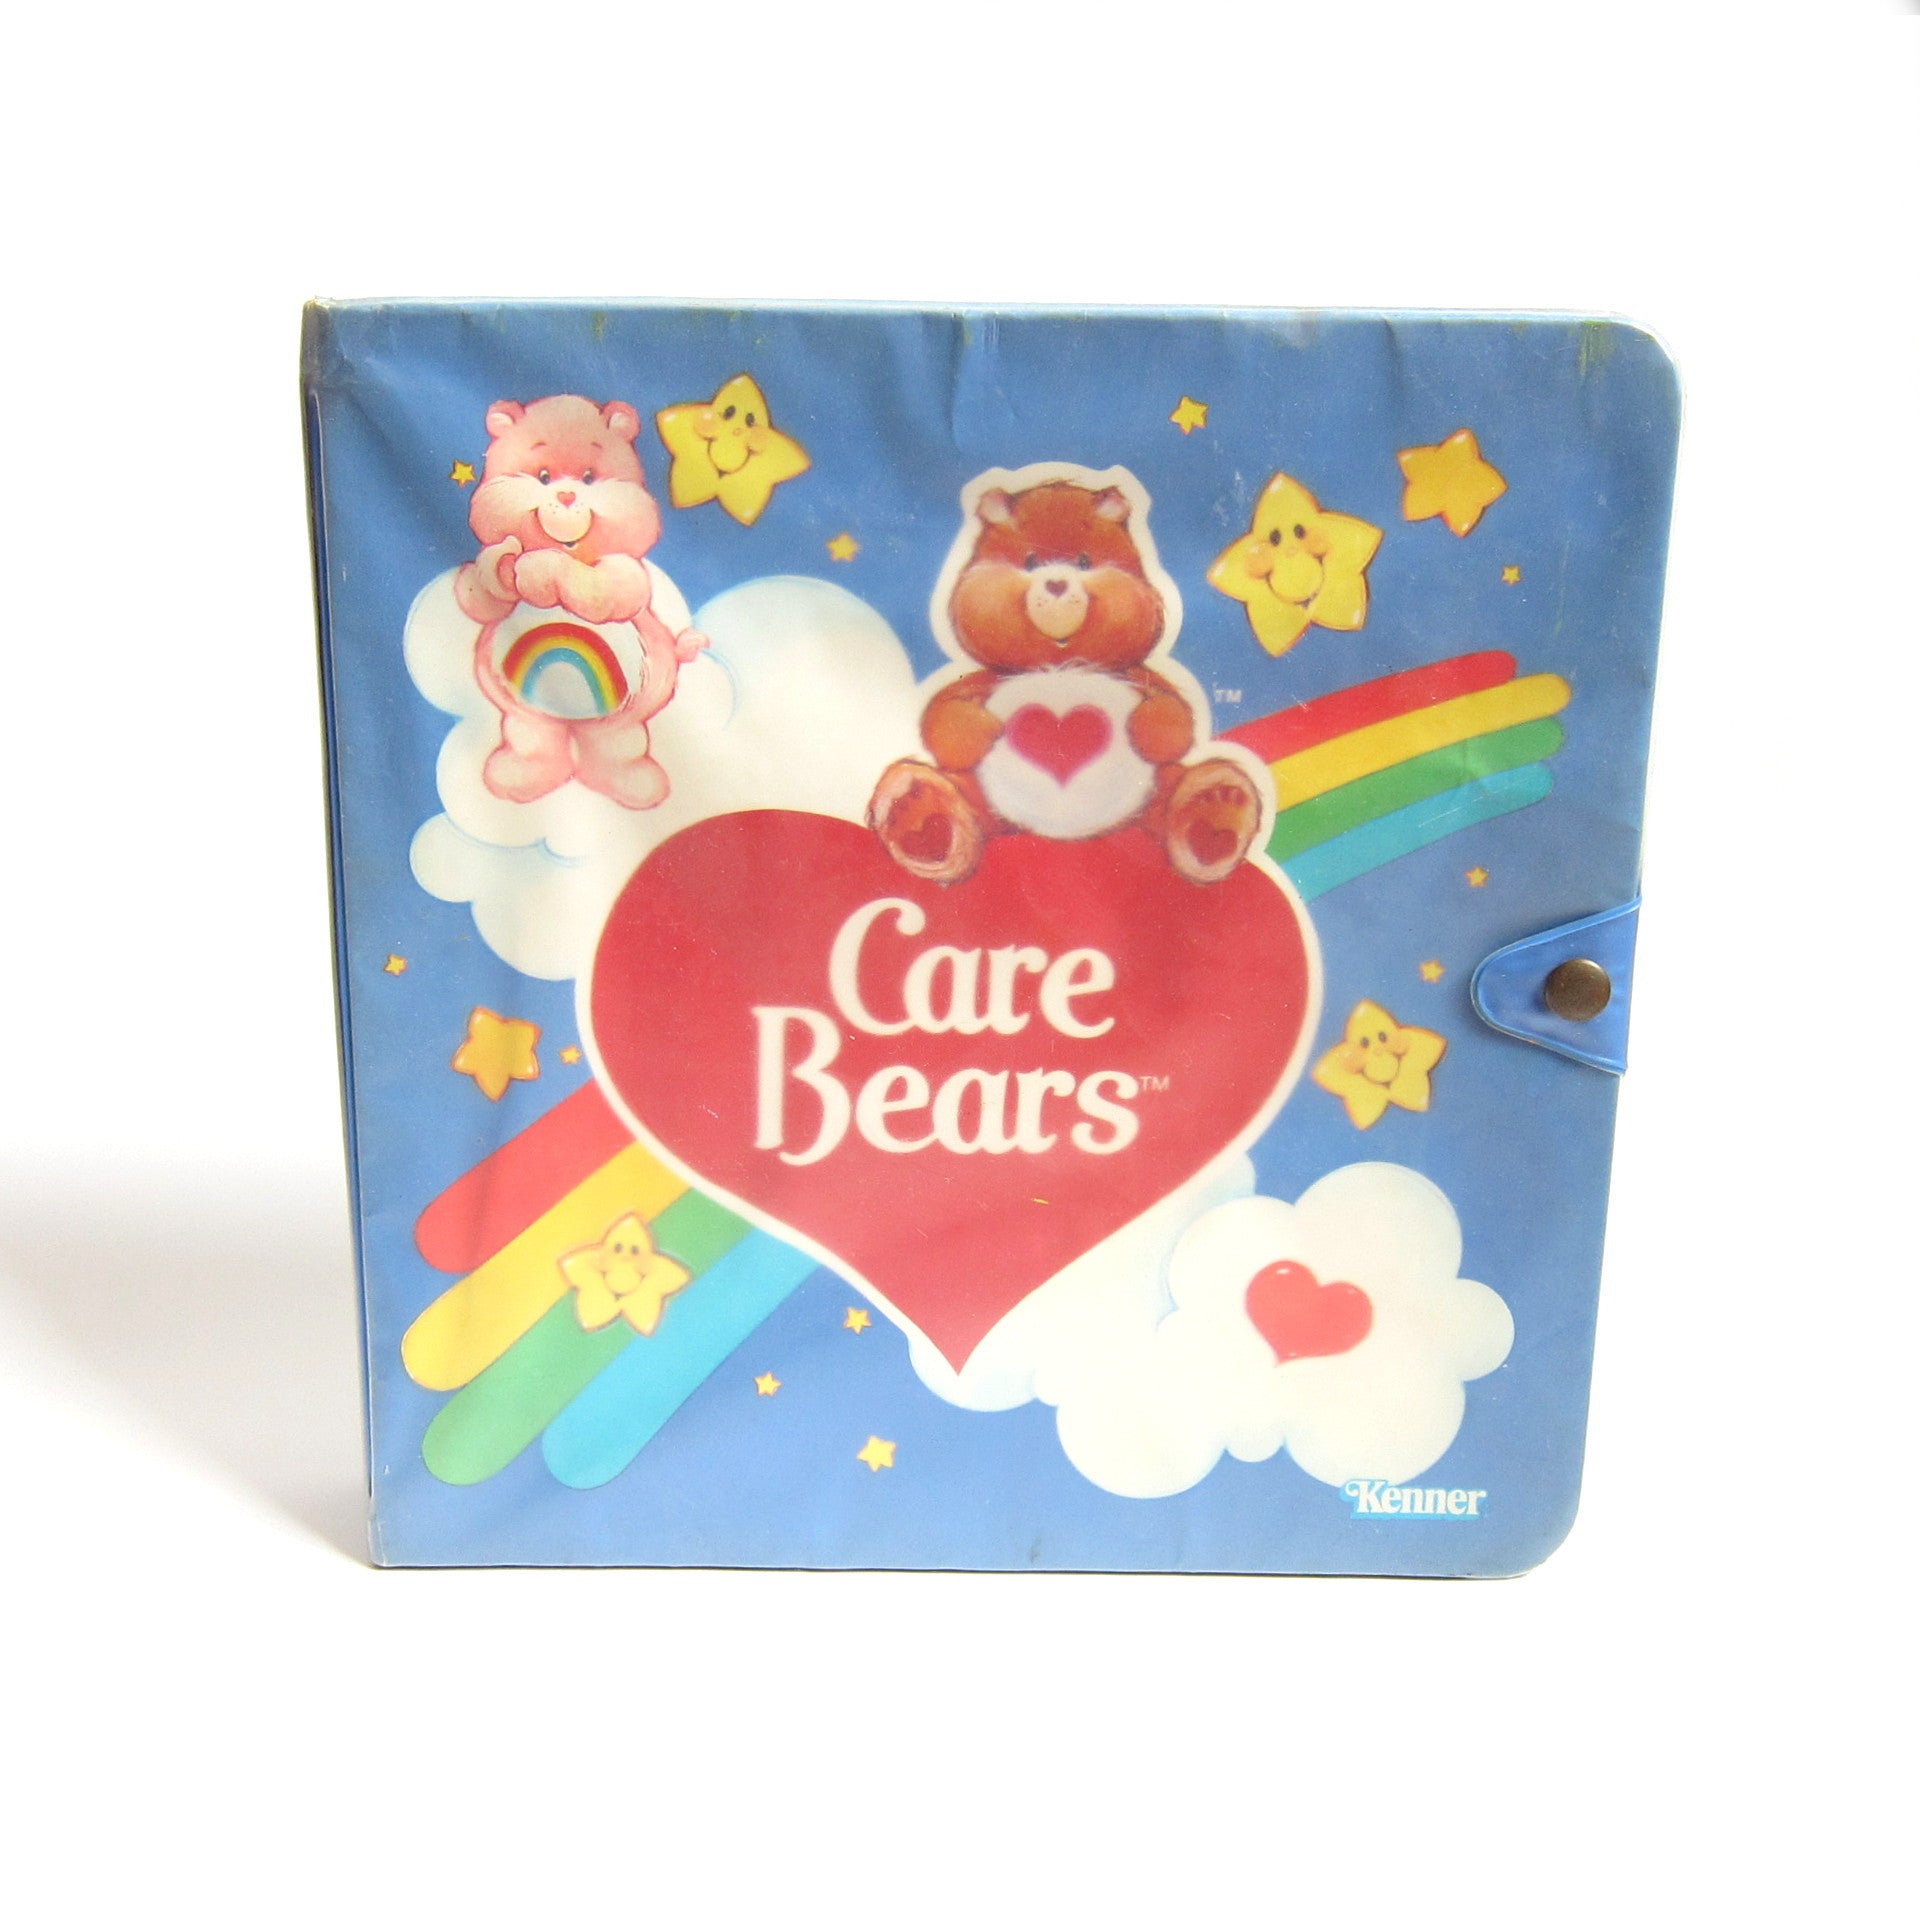 Care Bears Storybook miniature figurine storage case